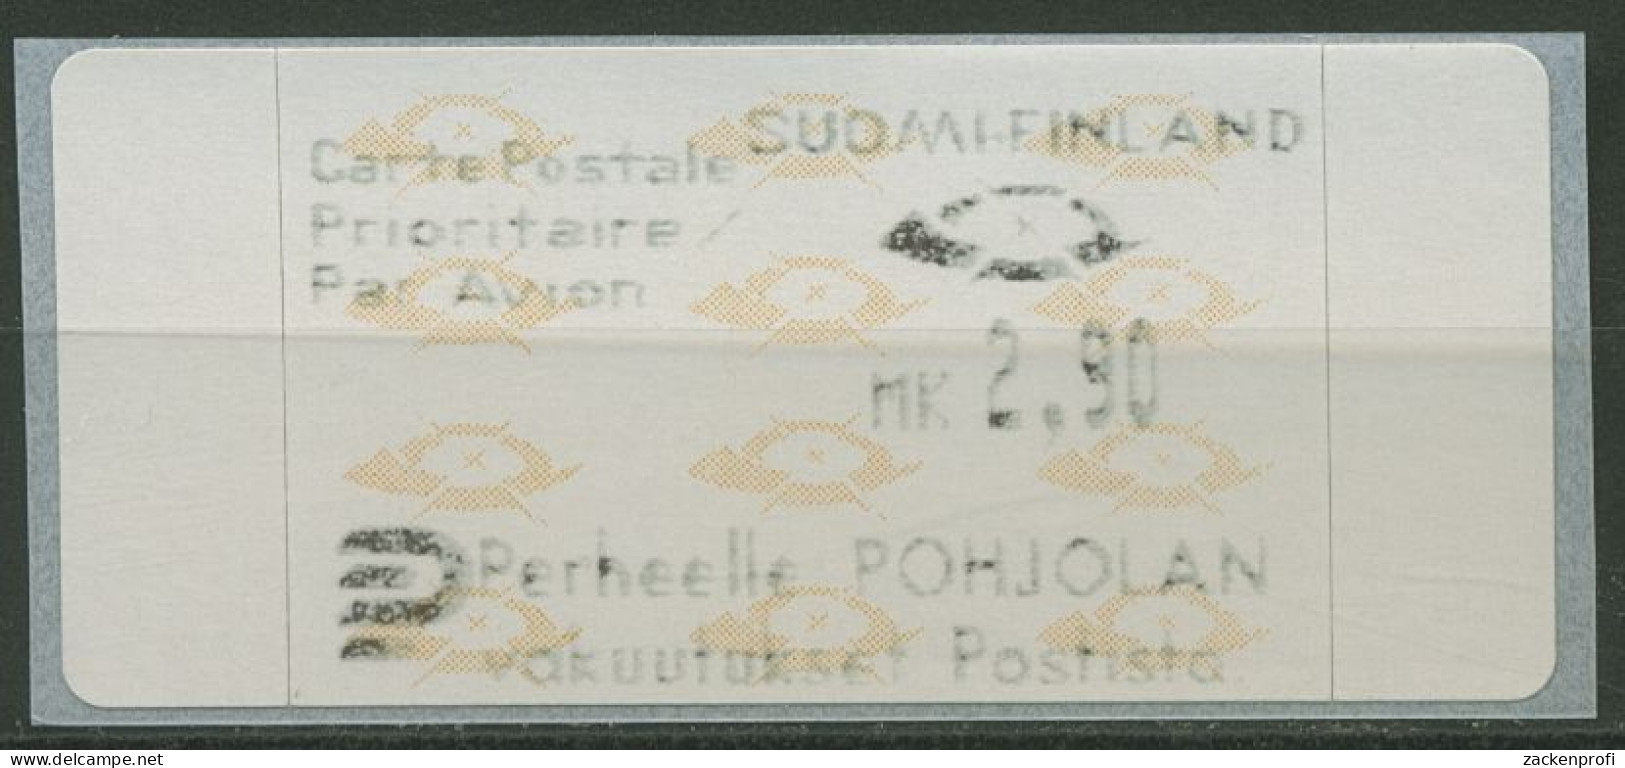 Finnland Automatenmarken 1992 Posthörner Einzelwert ATM 12.3 Z3 Postfrisch - Timbres De Distributeurs [ATM]